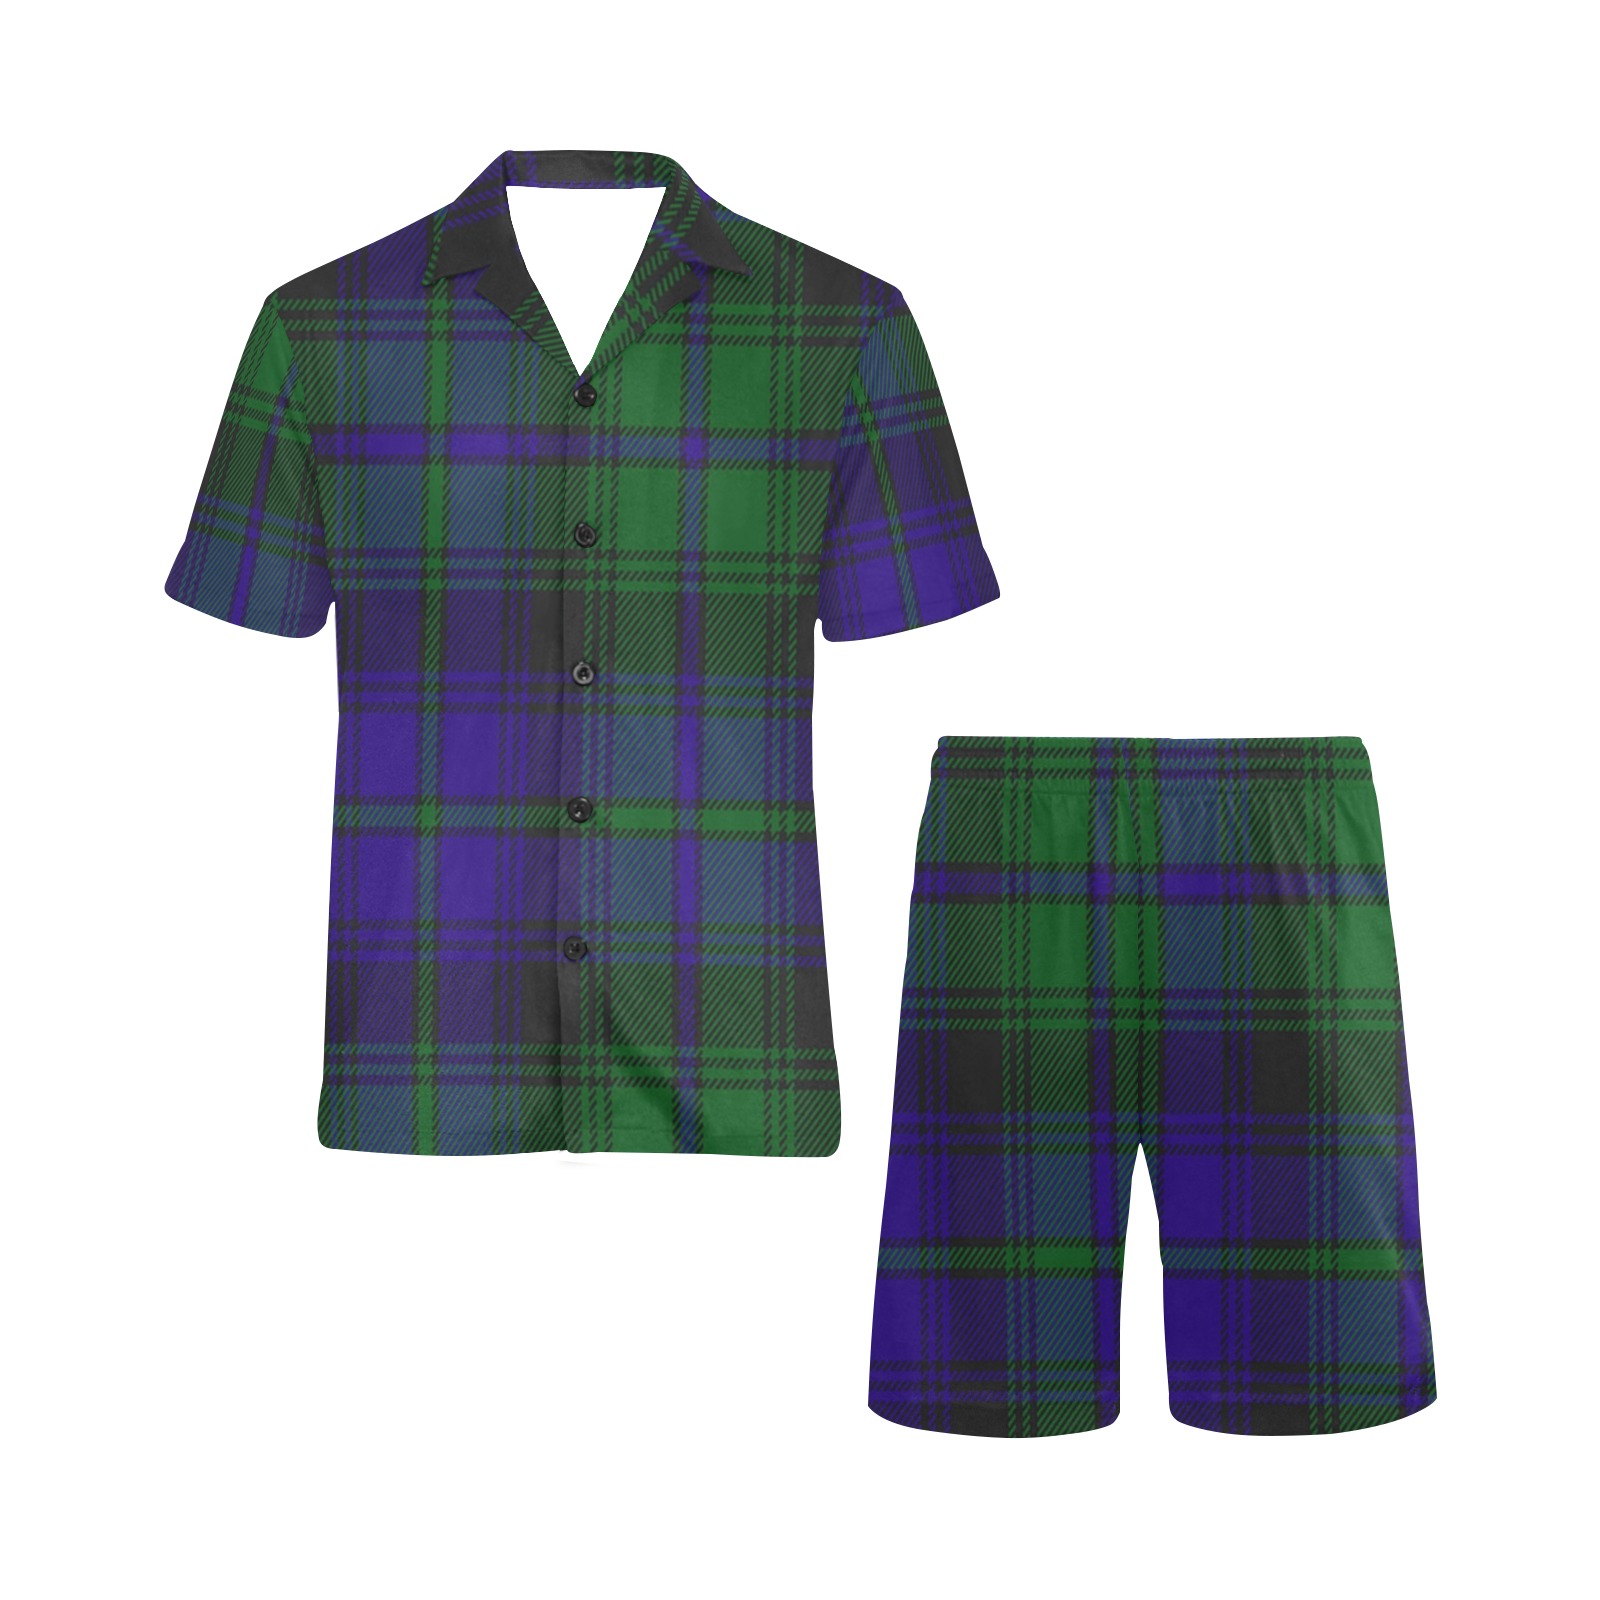 5TH. ROYAL SCOTS OF CANADA TARTAN Men's V-Neck Short Pajama Set